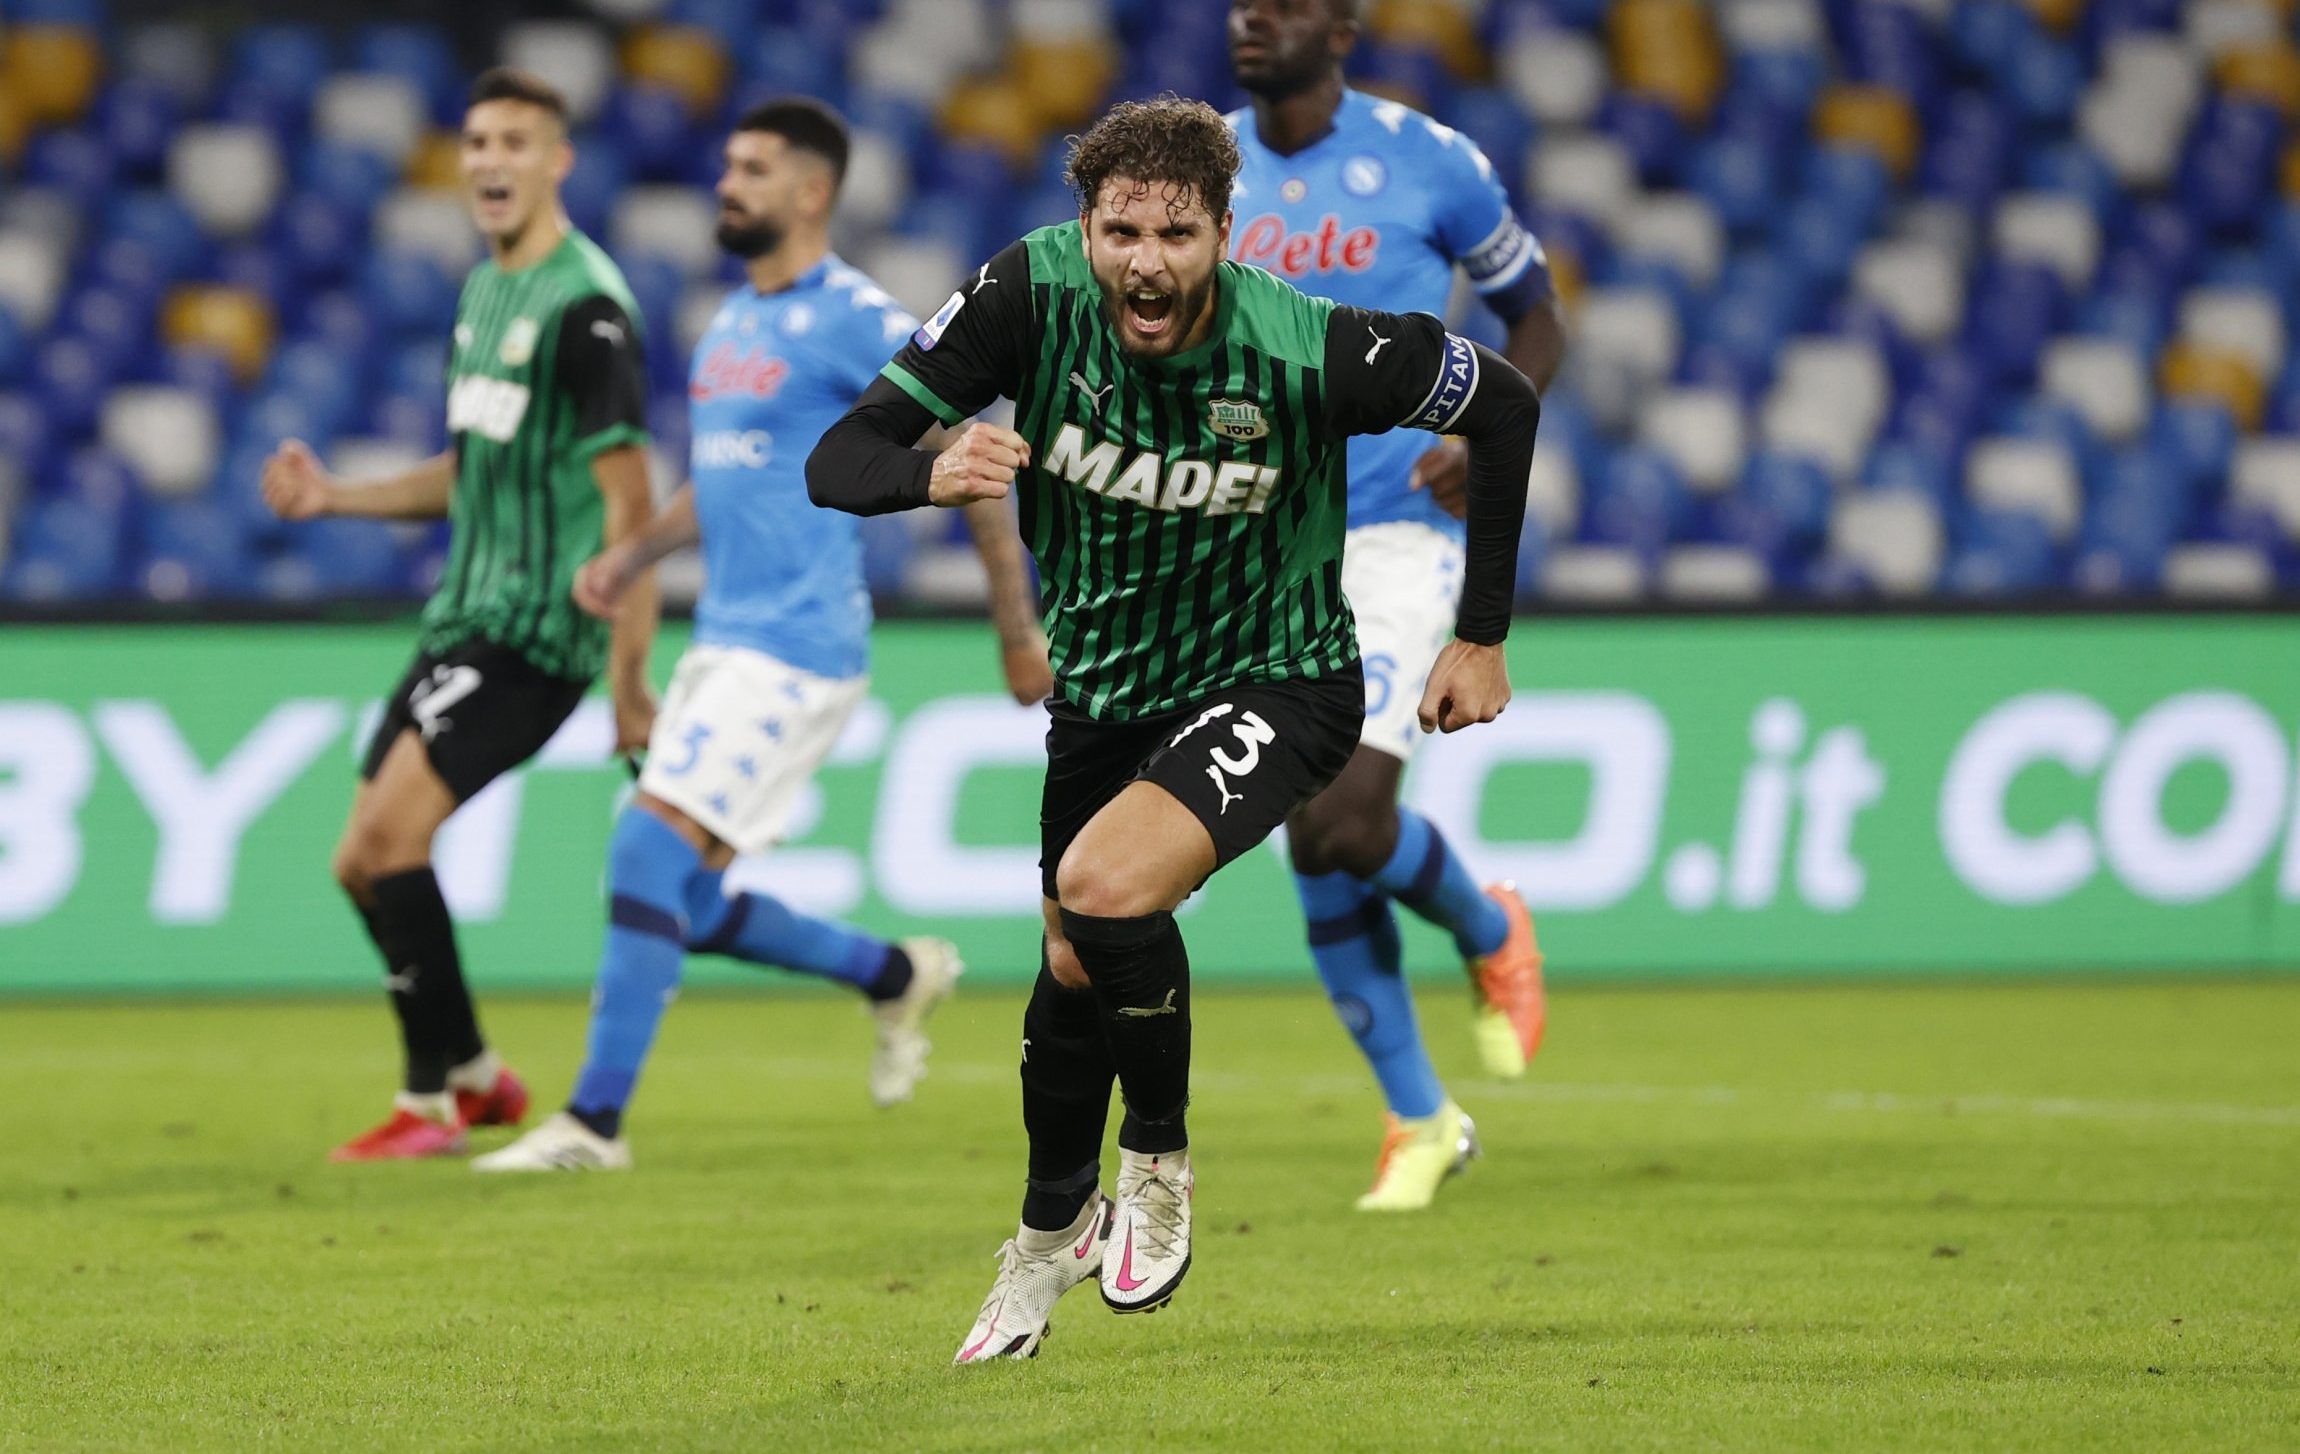 sassuolo midfielder manuel locatelli celebrates scoring against napoli in serie a